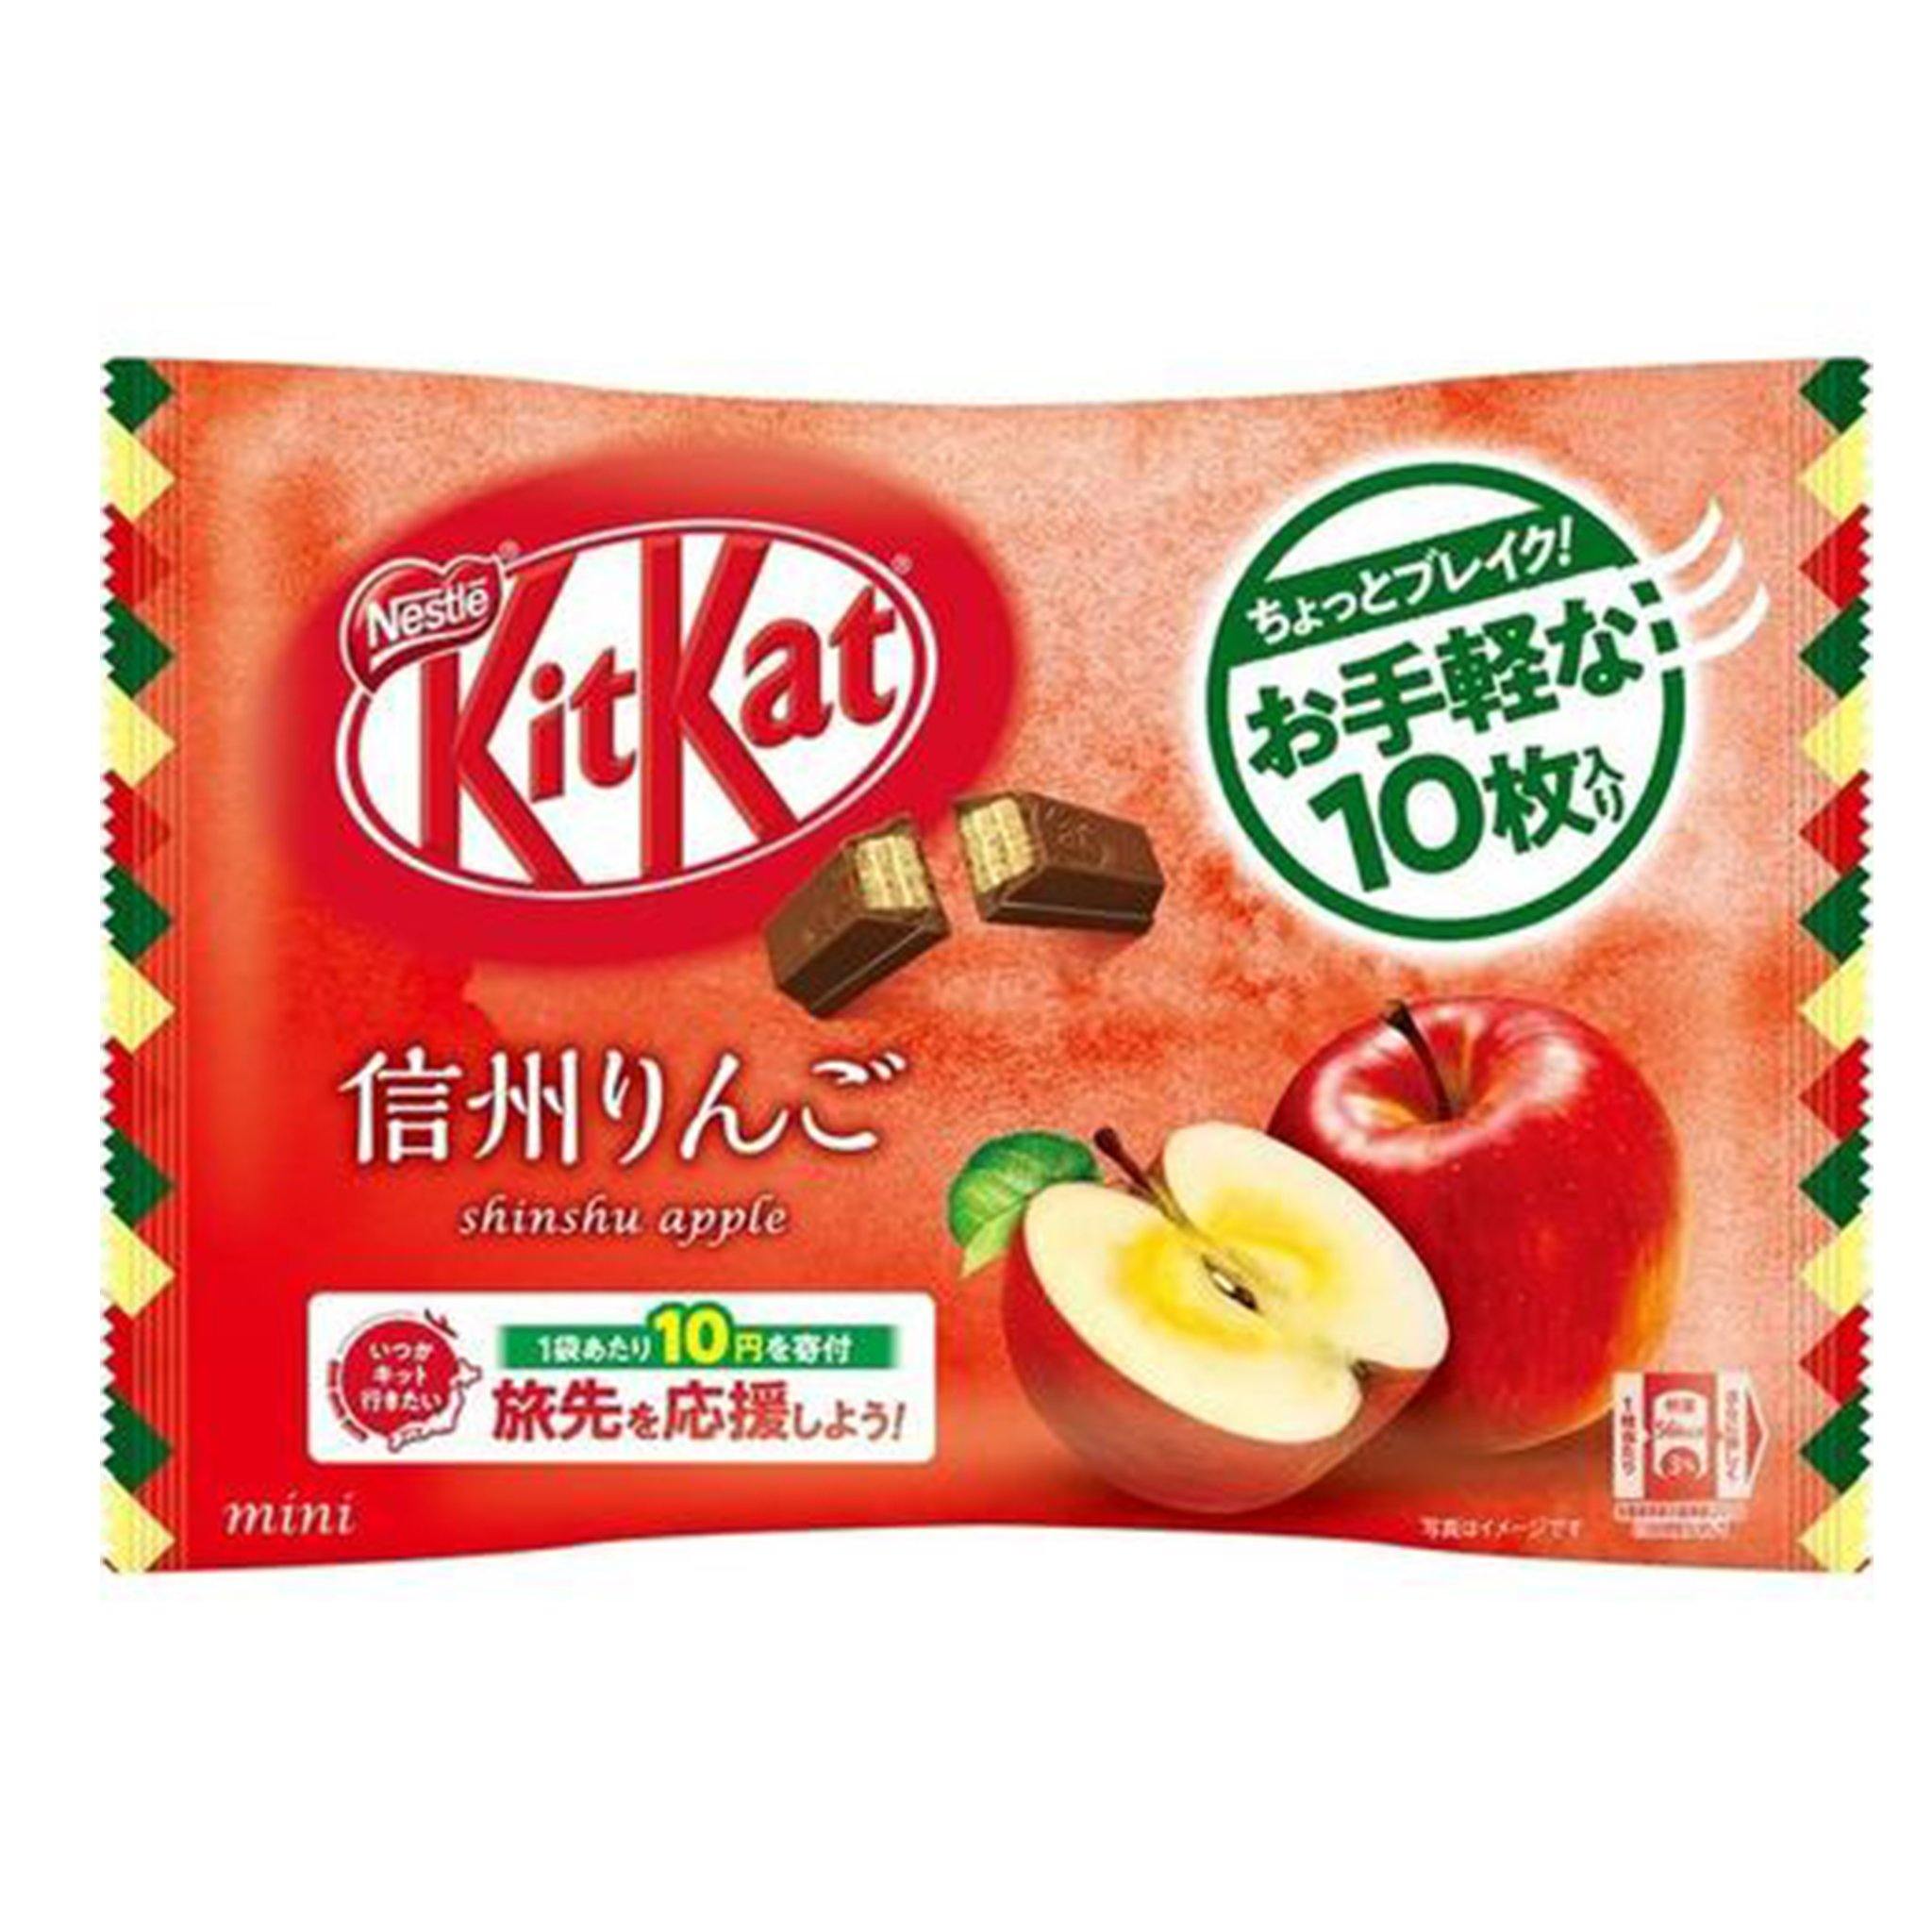 Kit Kat Apple - Japan - Sweet Exotics